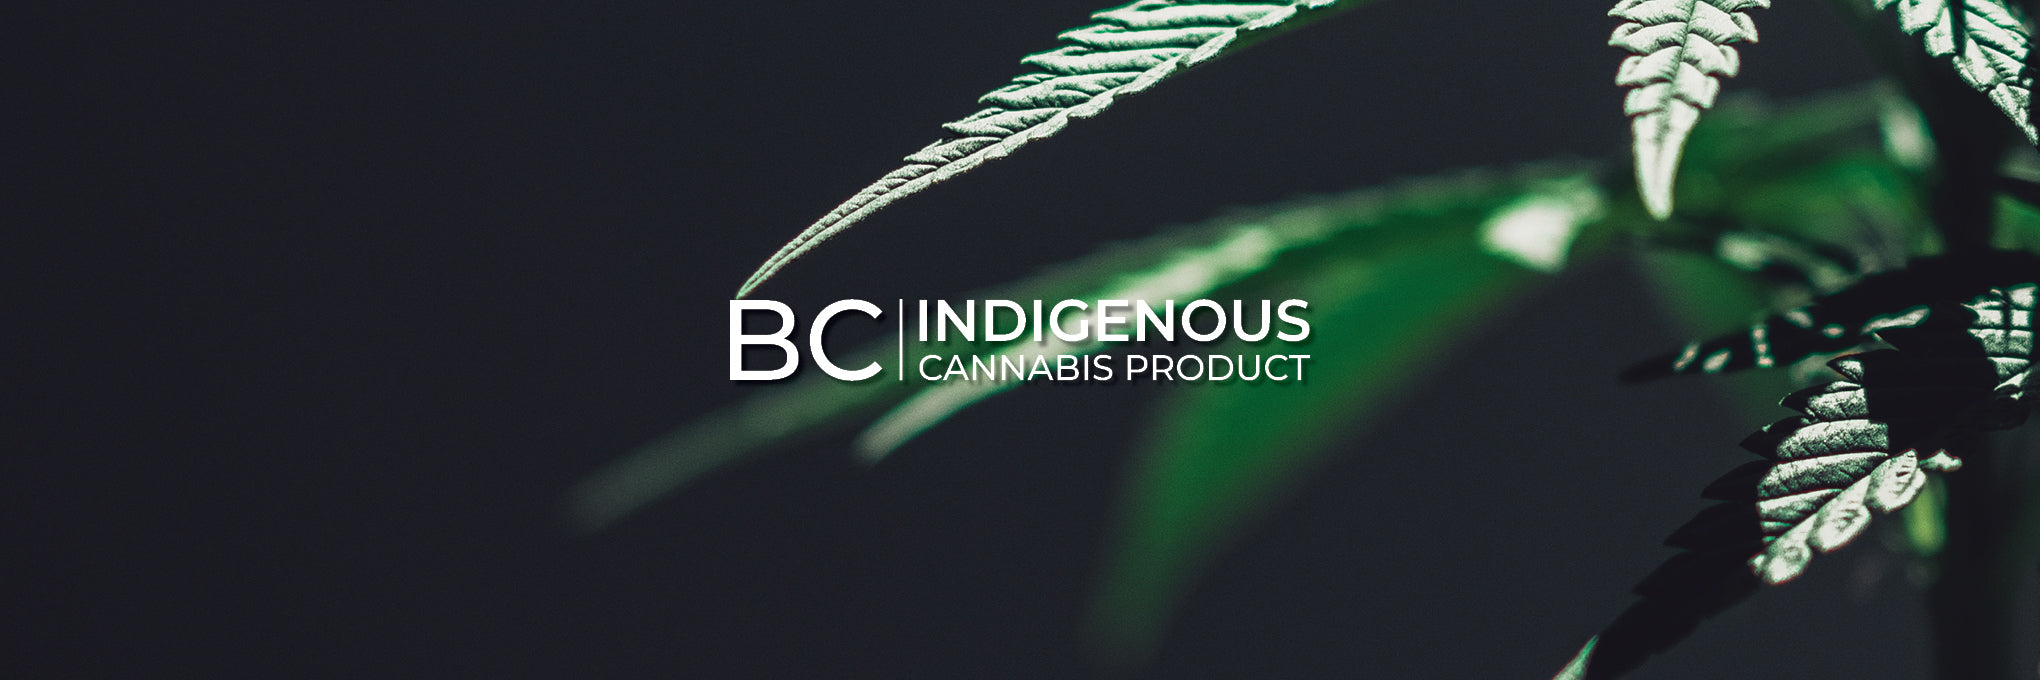 BC Indigenous Cannabis Product Program